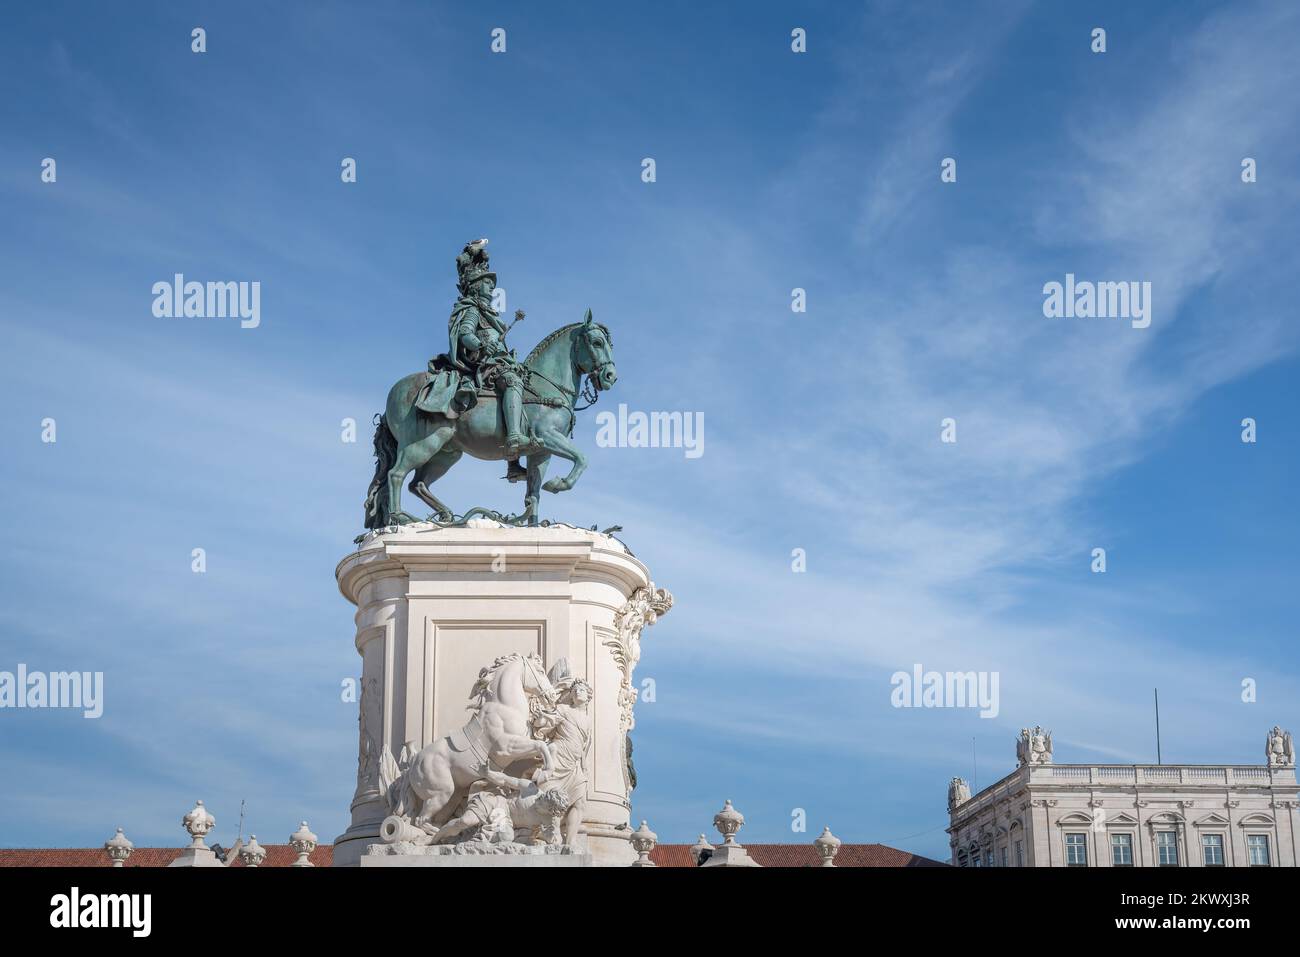 King Dom Jose I Statue at Praca do Comercio Square - Lisbon, Portugal Stock Photo